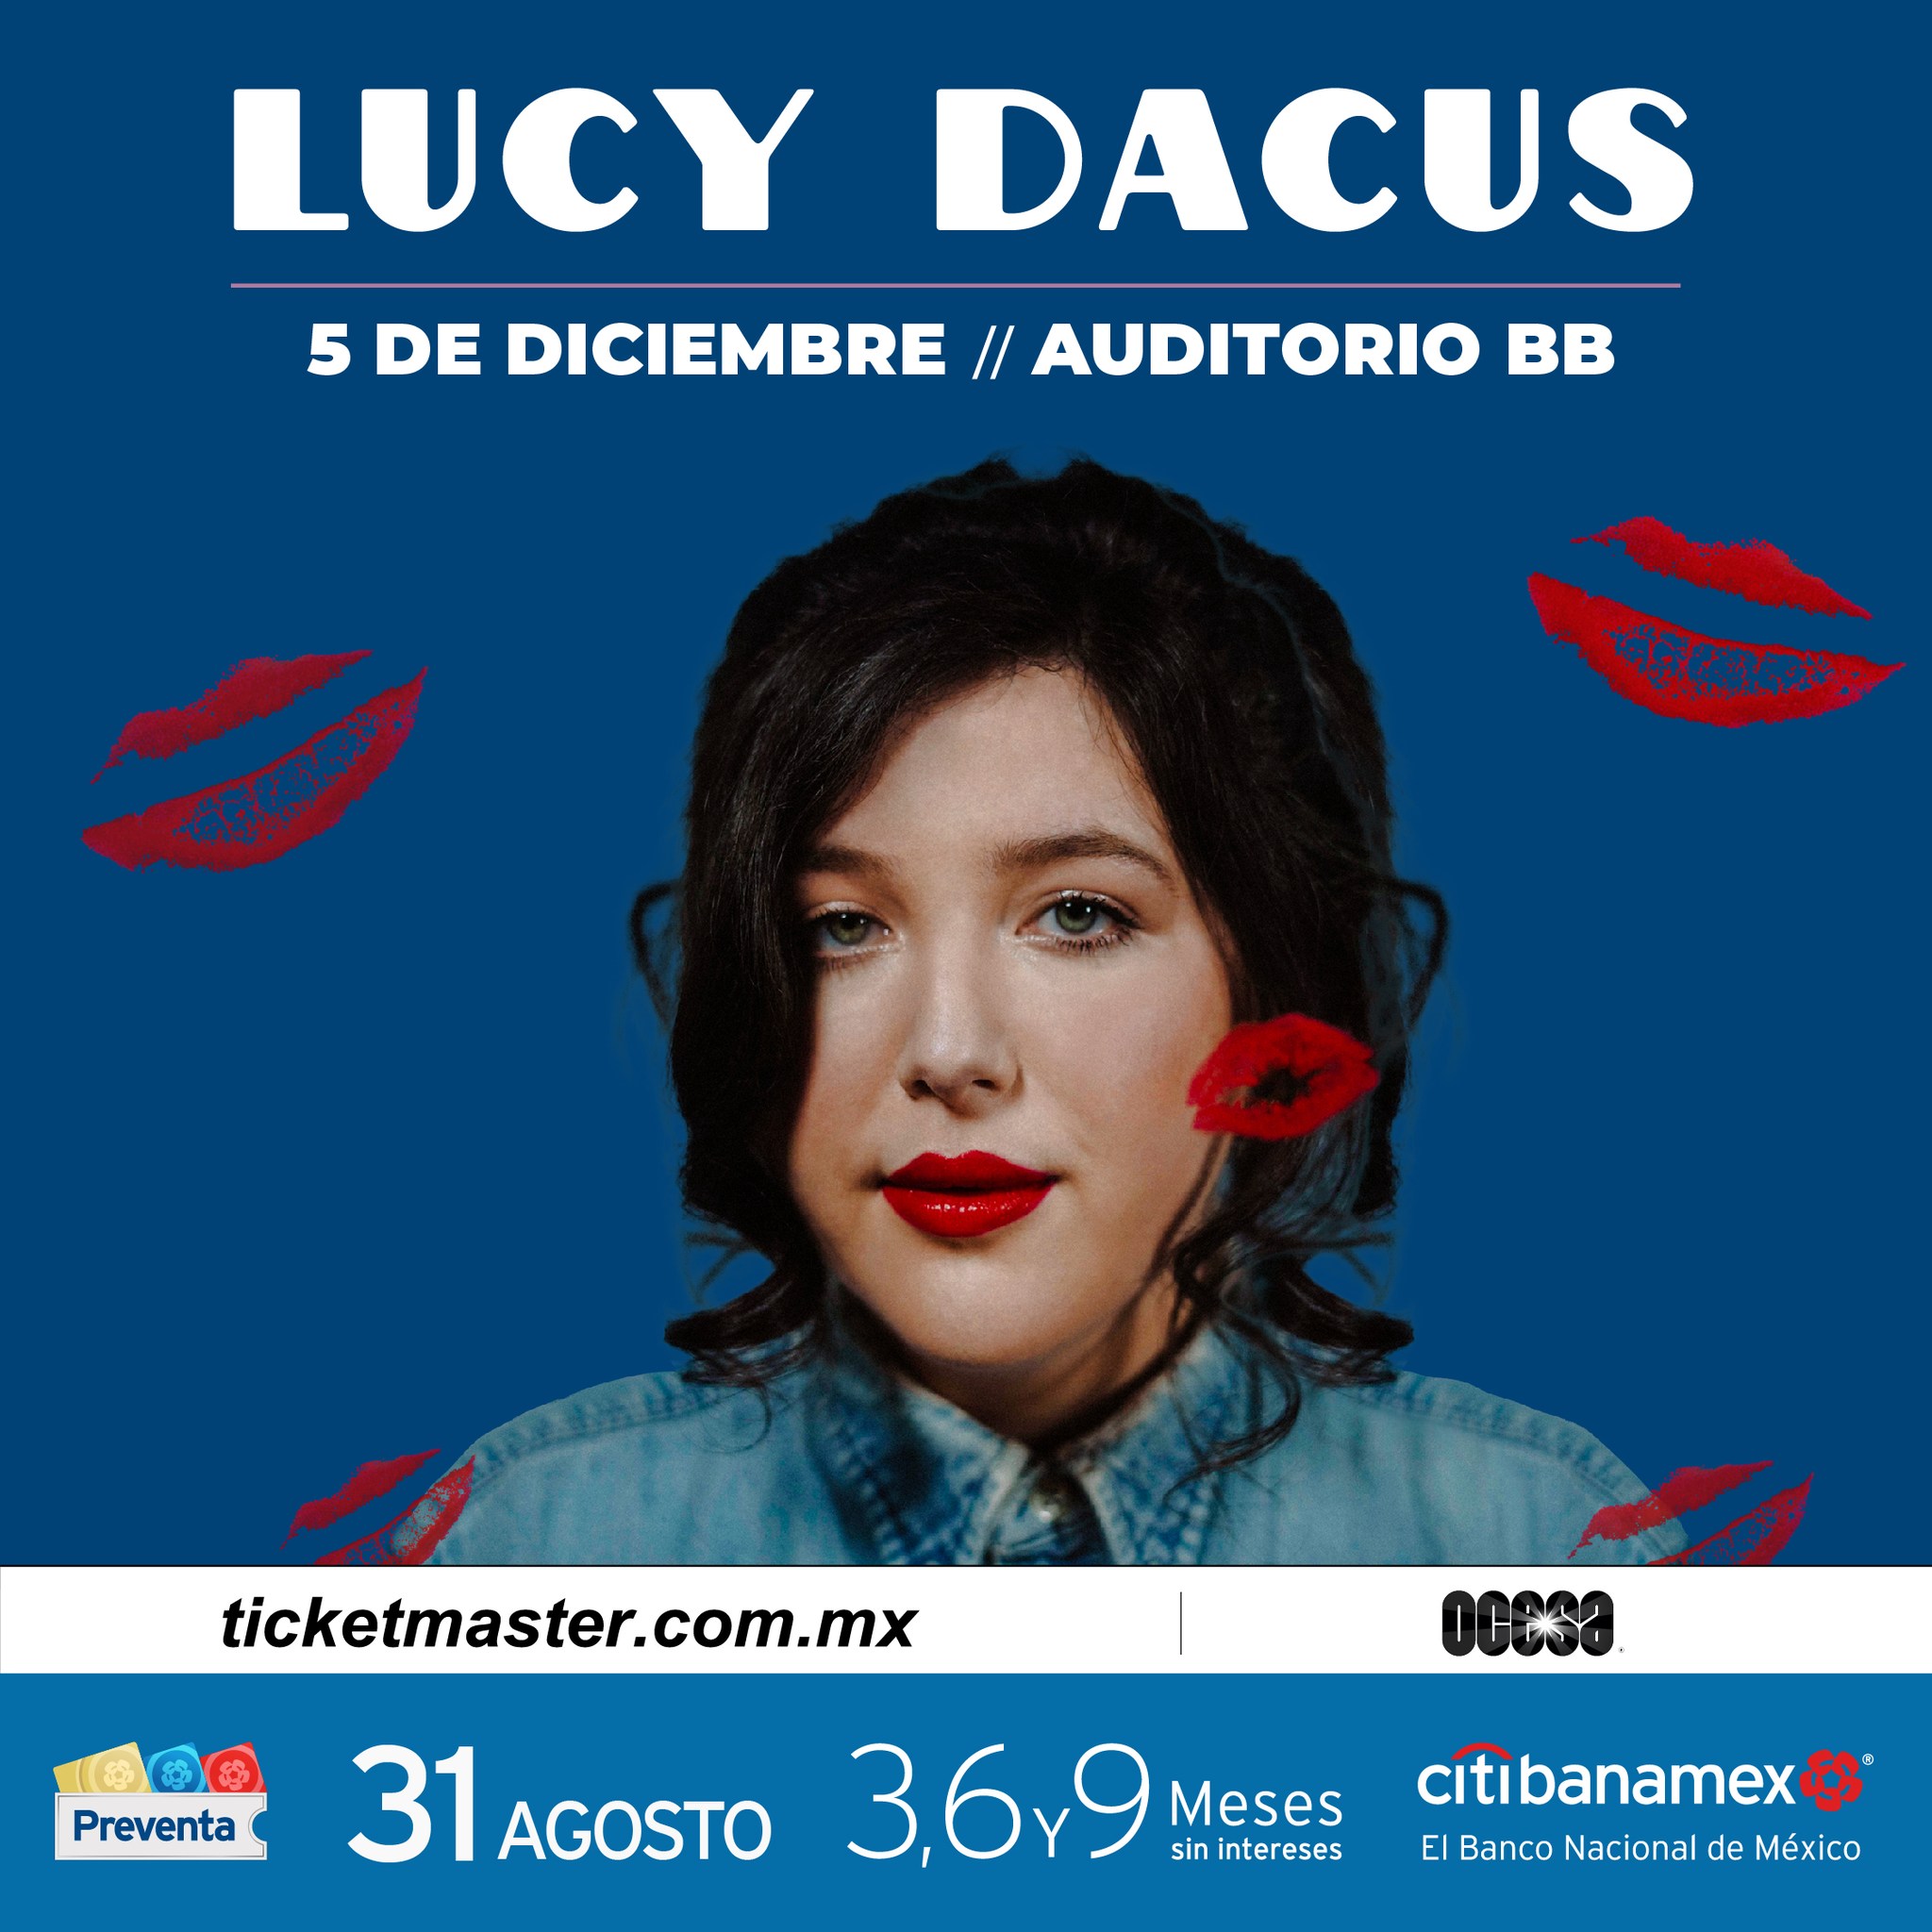 Lucy Dacus auditoro bb 2022